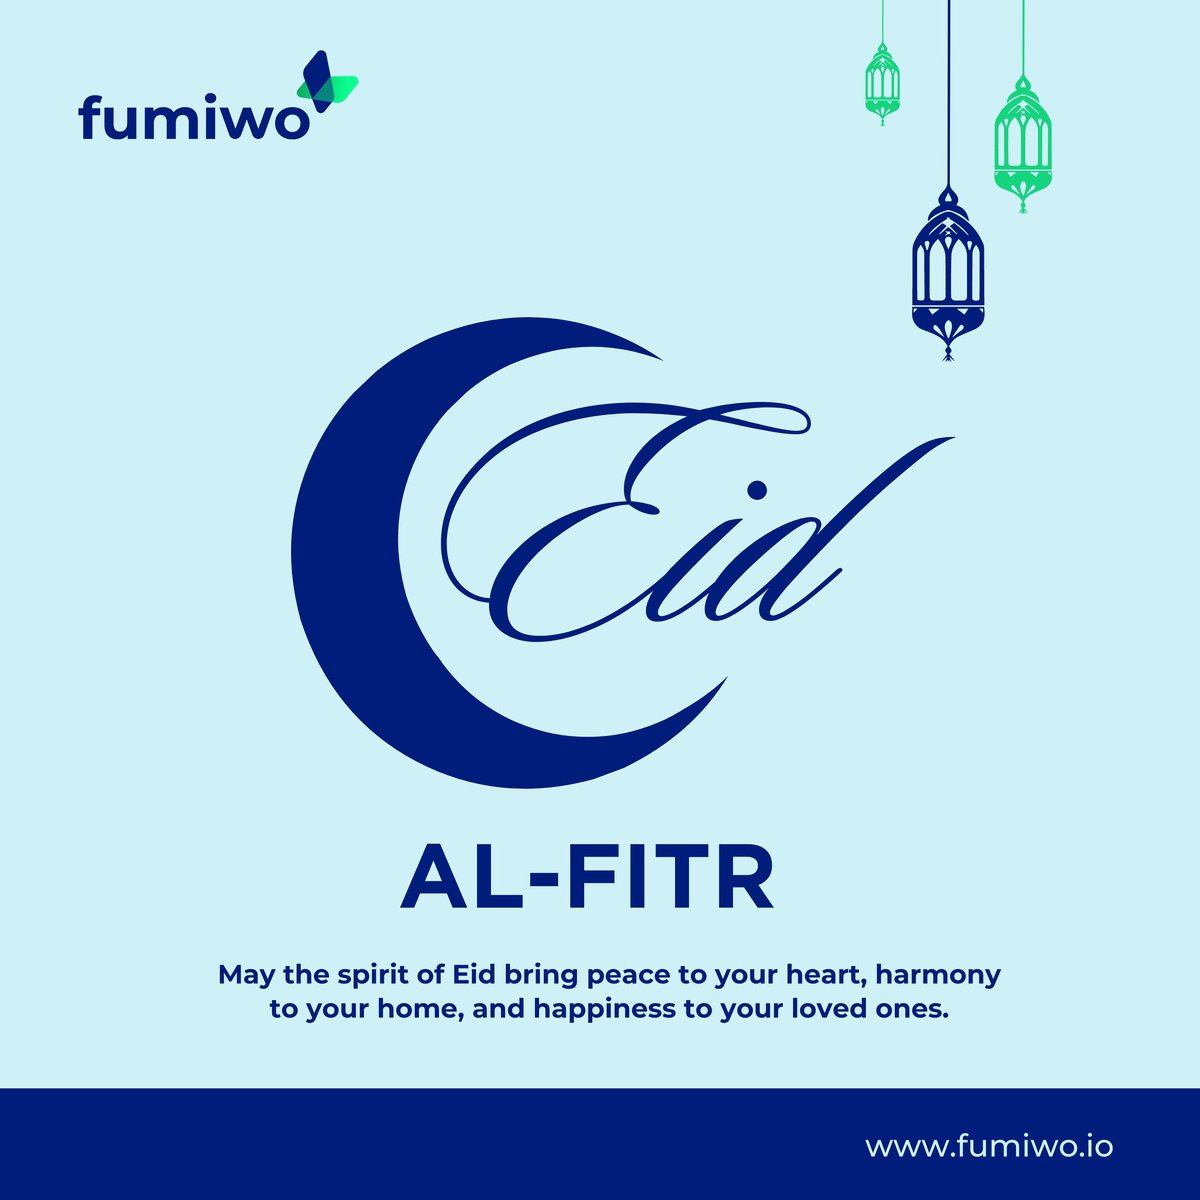 Happy Eid al fitr from Fumiwo 

#CreditScoringSolutions
#FinancialInnovation
#DataDrivenDecisions
#B2BFintech
#CreditRiskManagement
#SmartLending
#FintechInnovation
#CreditScoring
#ResponsibleLending 
#DataPrivacy